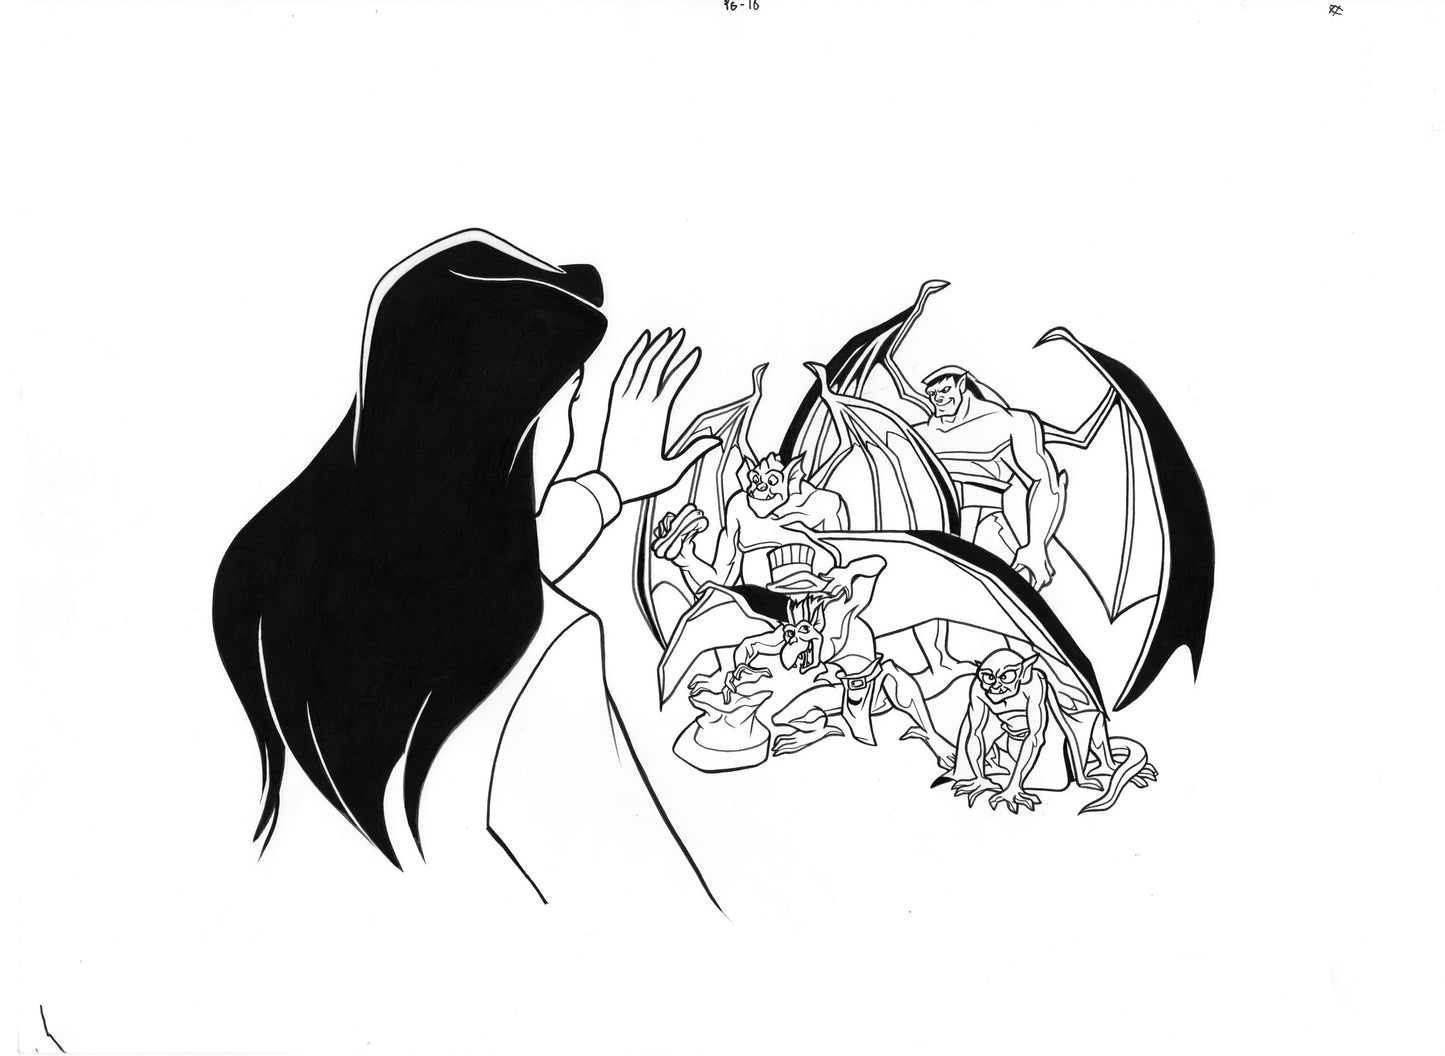 Gargoyles Book Page Original Illustration Hand-Inked Drawing 1996 page 16 Disney